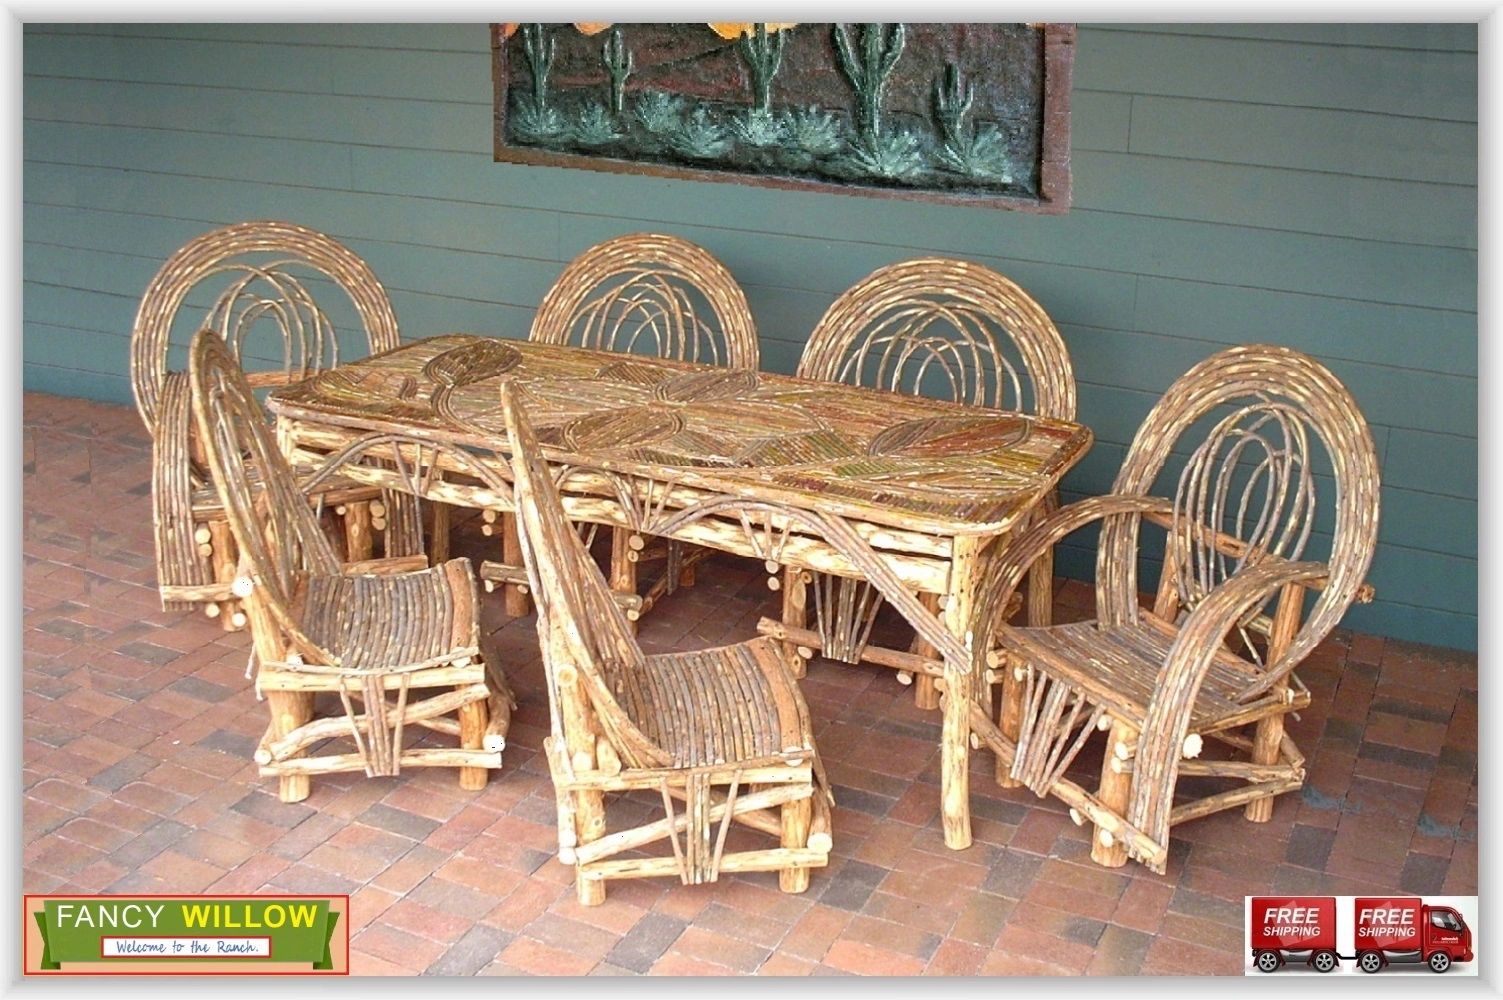 FancyWillow Póóls Patio Furniture Chéss Outdoor Backyard Garden Resort Farmhouse Lodge Cabin Lake AI